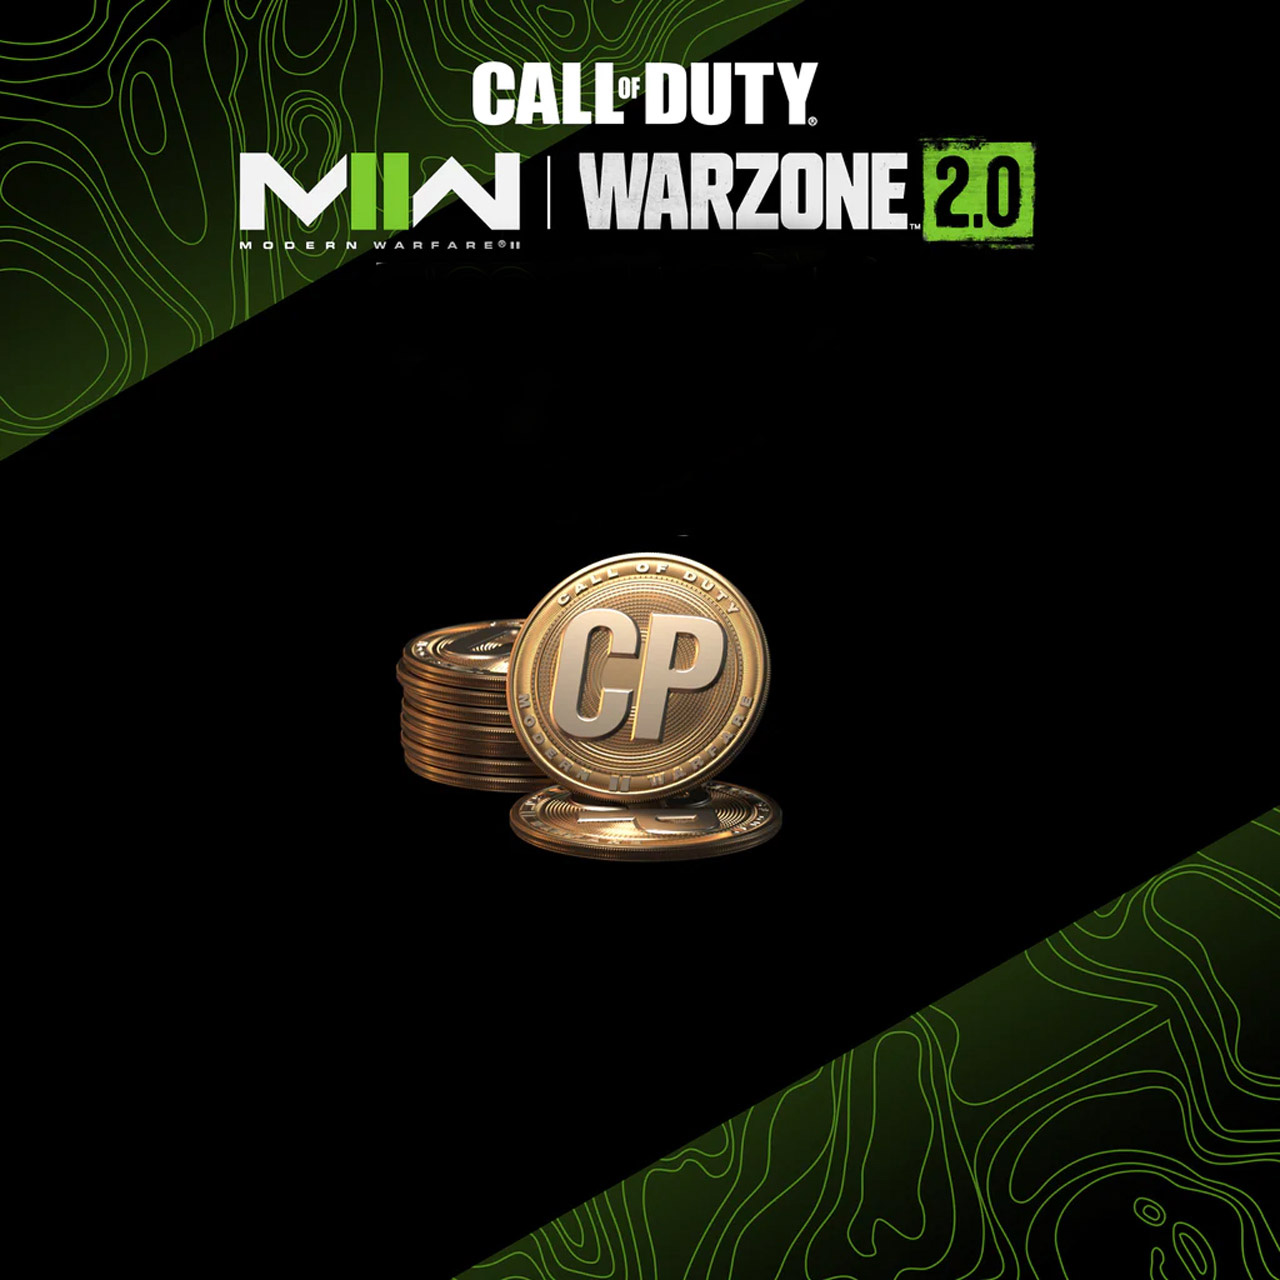 Call of Duty Warzone 2.0 Points battlenet pc 7 - خرید سی پی کالاف دیوتی وارزون 2 برای بازی Call of Duty:Modern Warfare II or Warzone 2.0